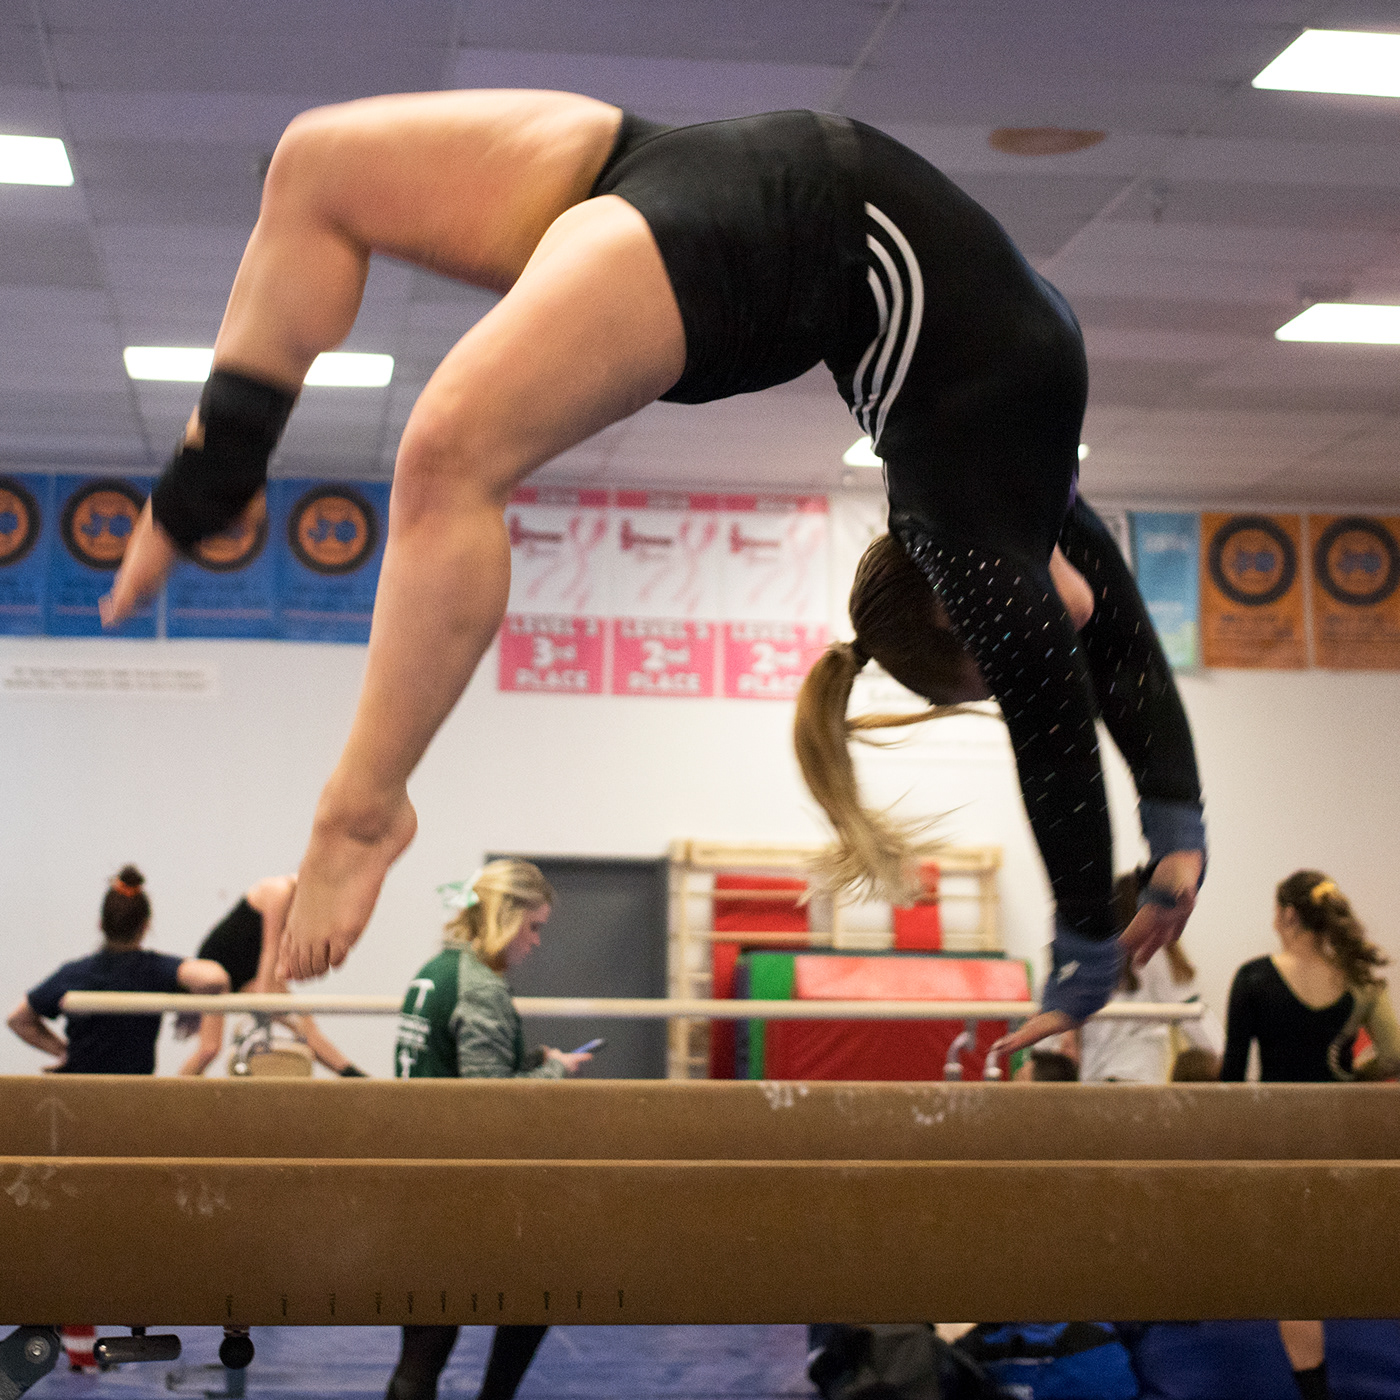 gymnastics gymnast Meet Competition beam bars flip stop motion Canon